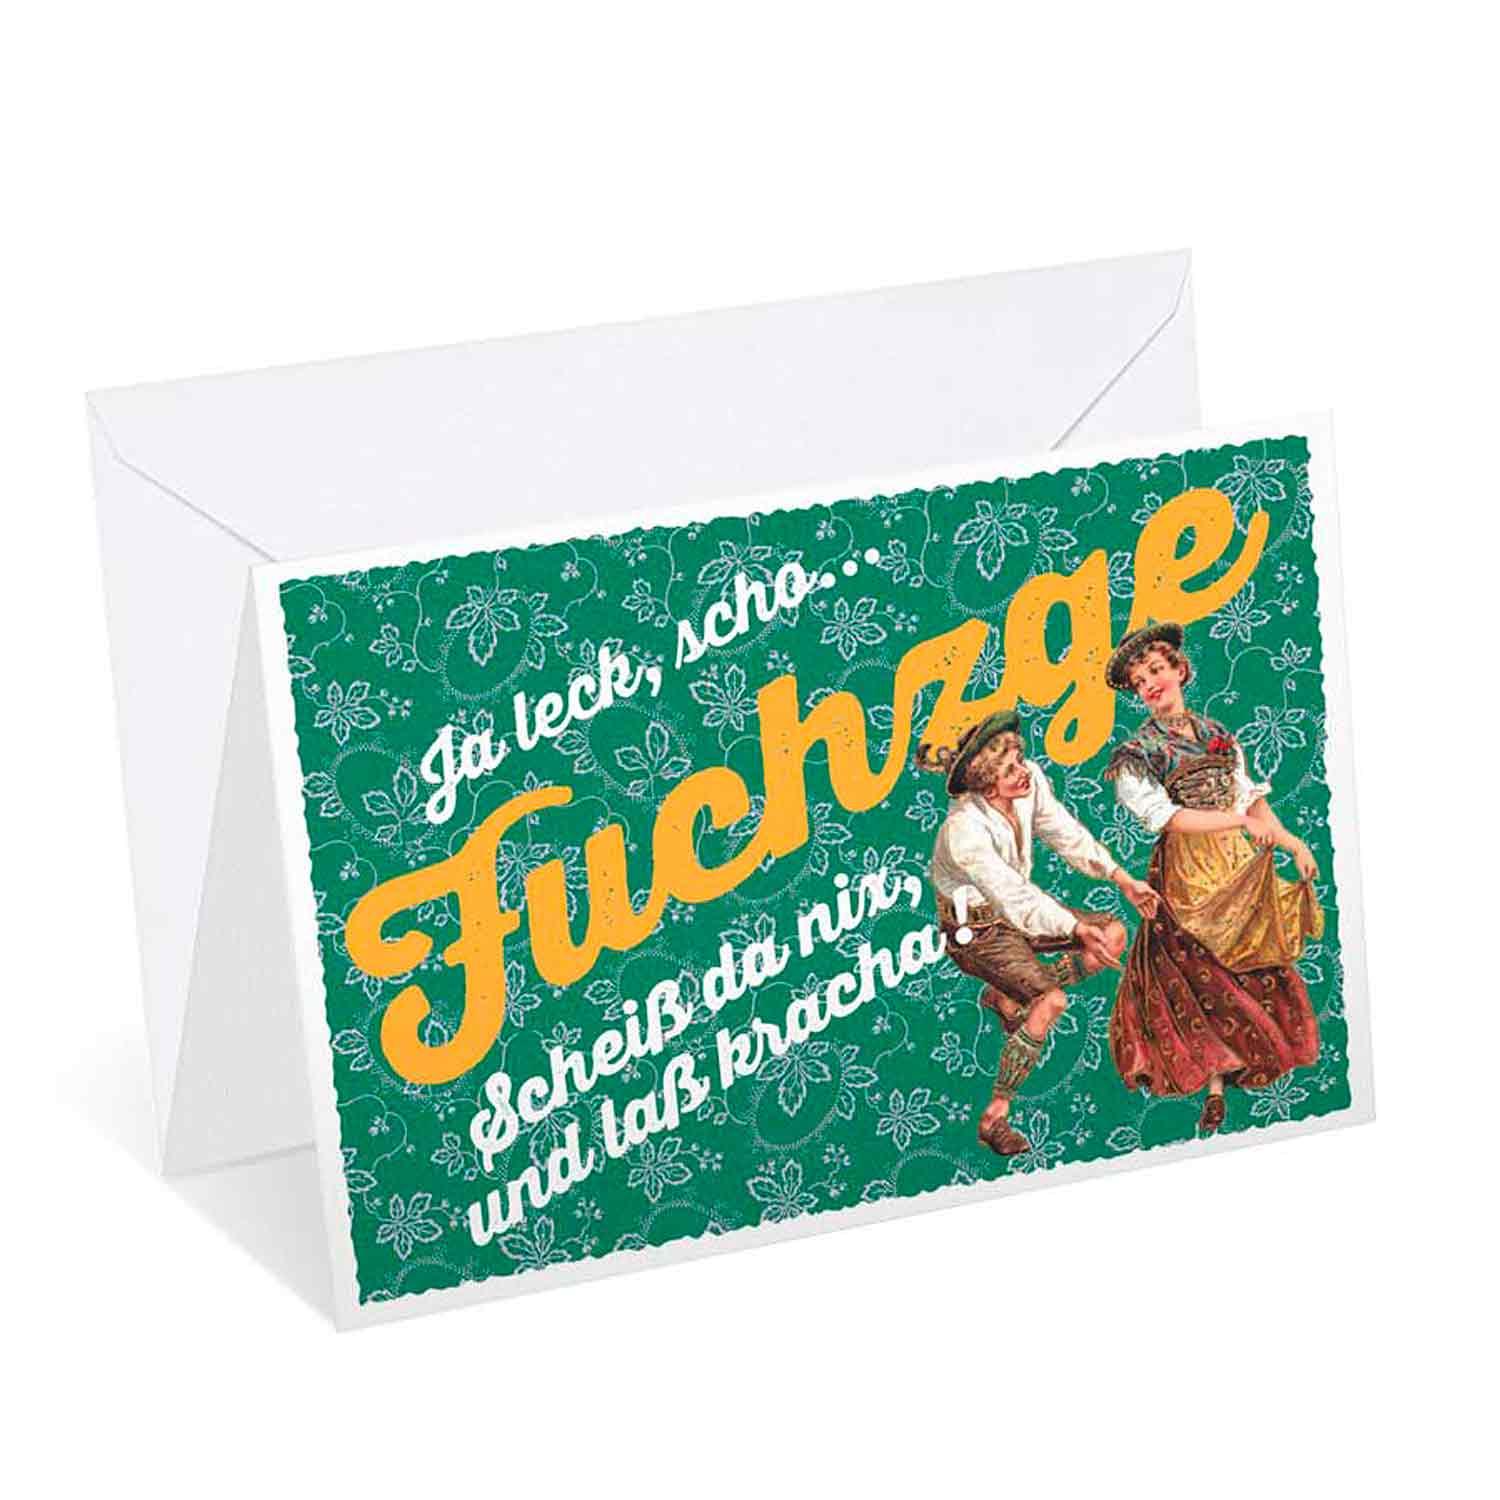 Geburtstagskarte zum 50. "Fuchzge" - bavariashop - mei LebensGfui